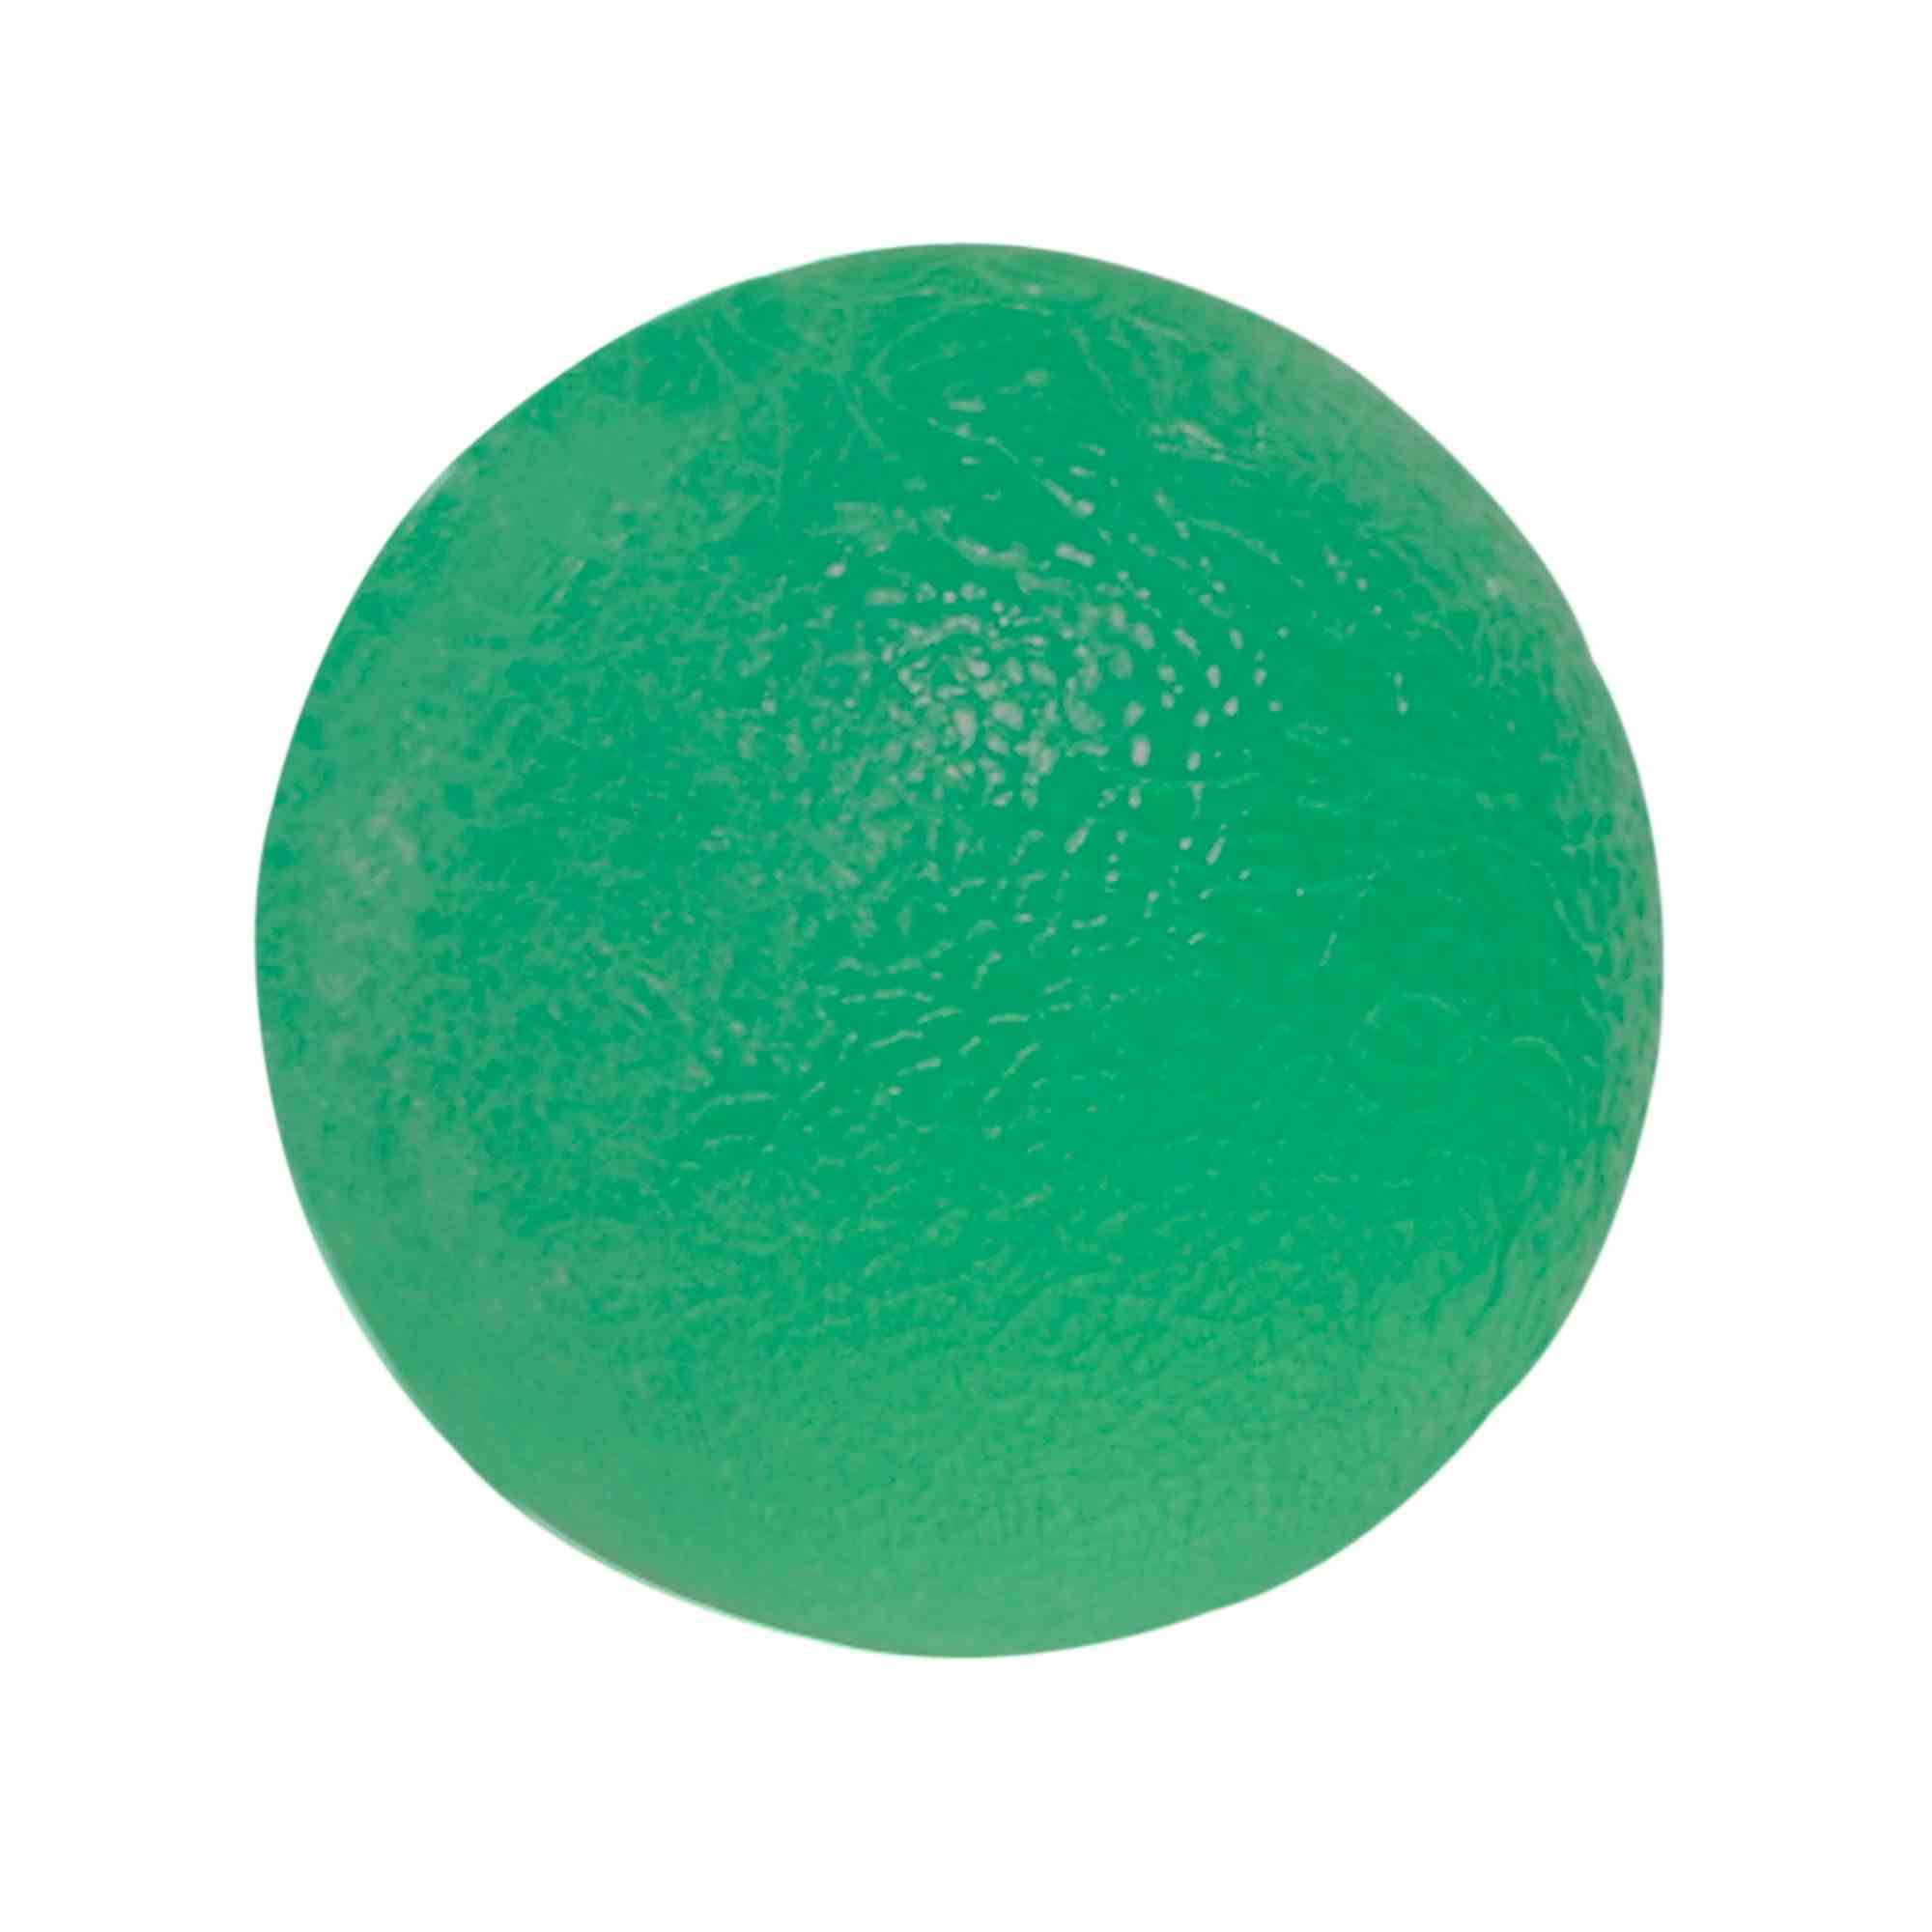 CanDo Physical Therapy Squeeze Ball, 10-1493-EA1, 1 Ball